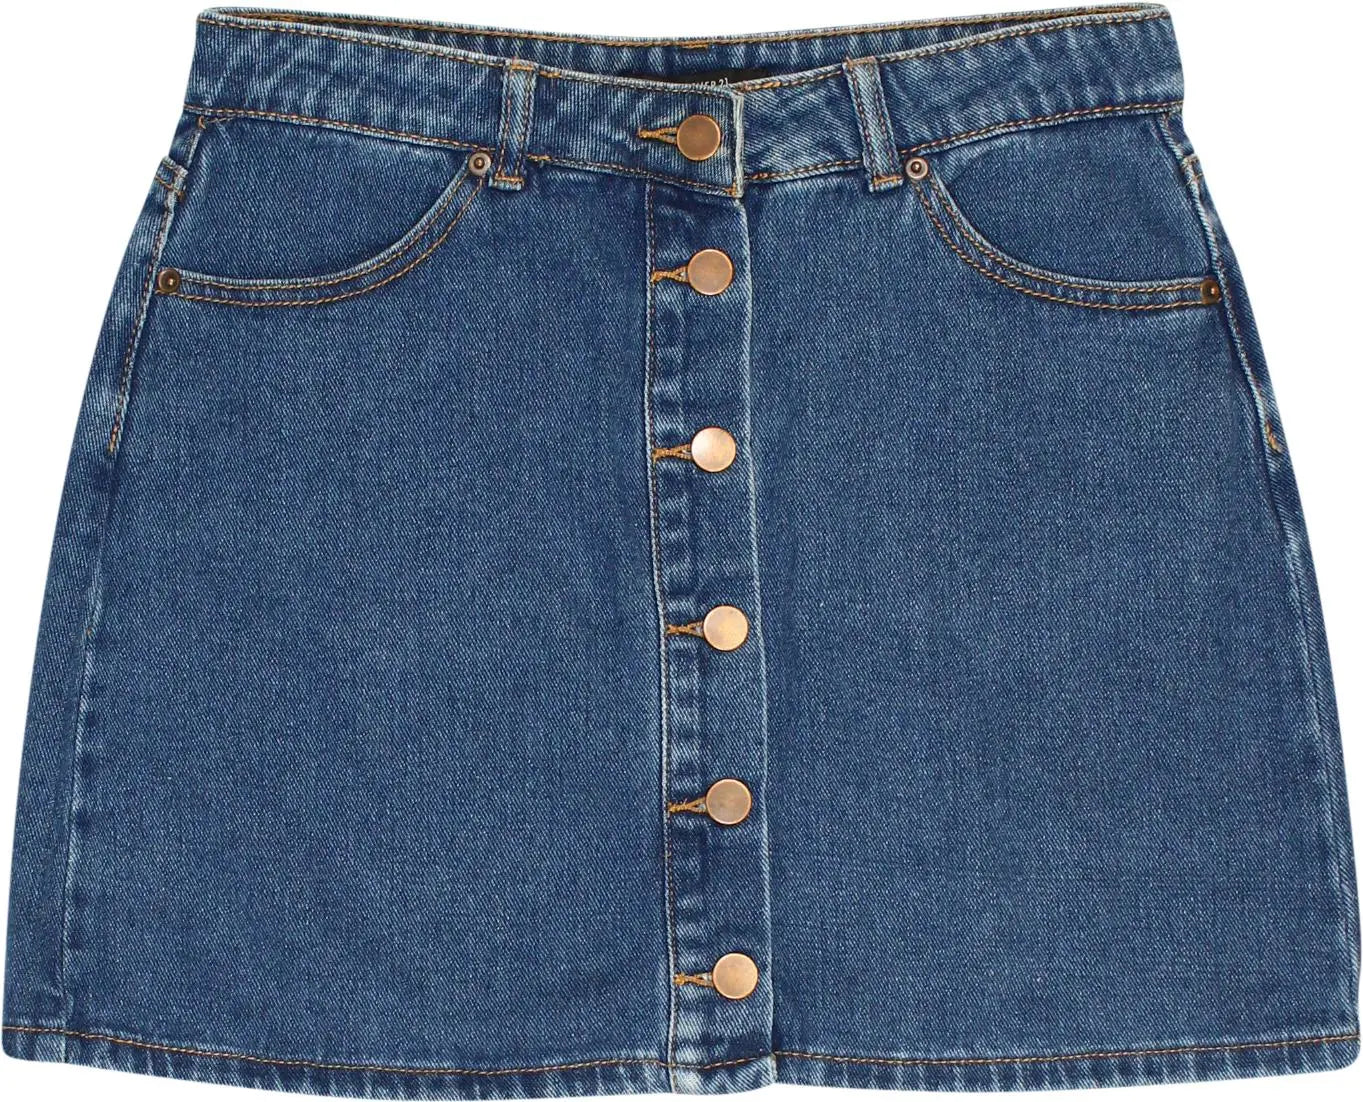 Forever 21 - Denim Skirt- ThriftTale.com - Vintage and second handclothing